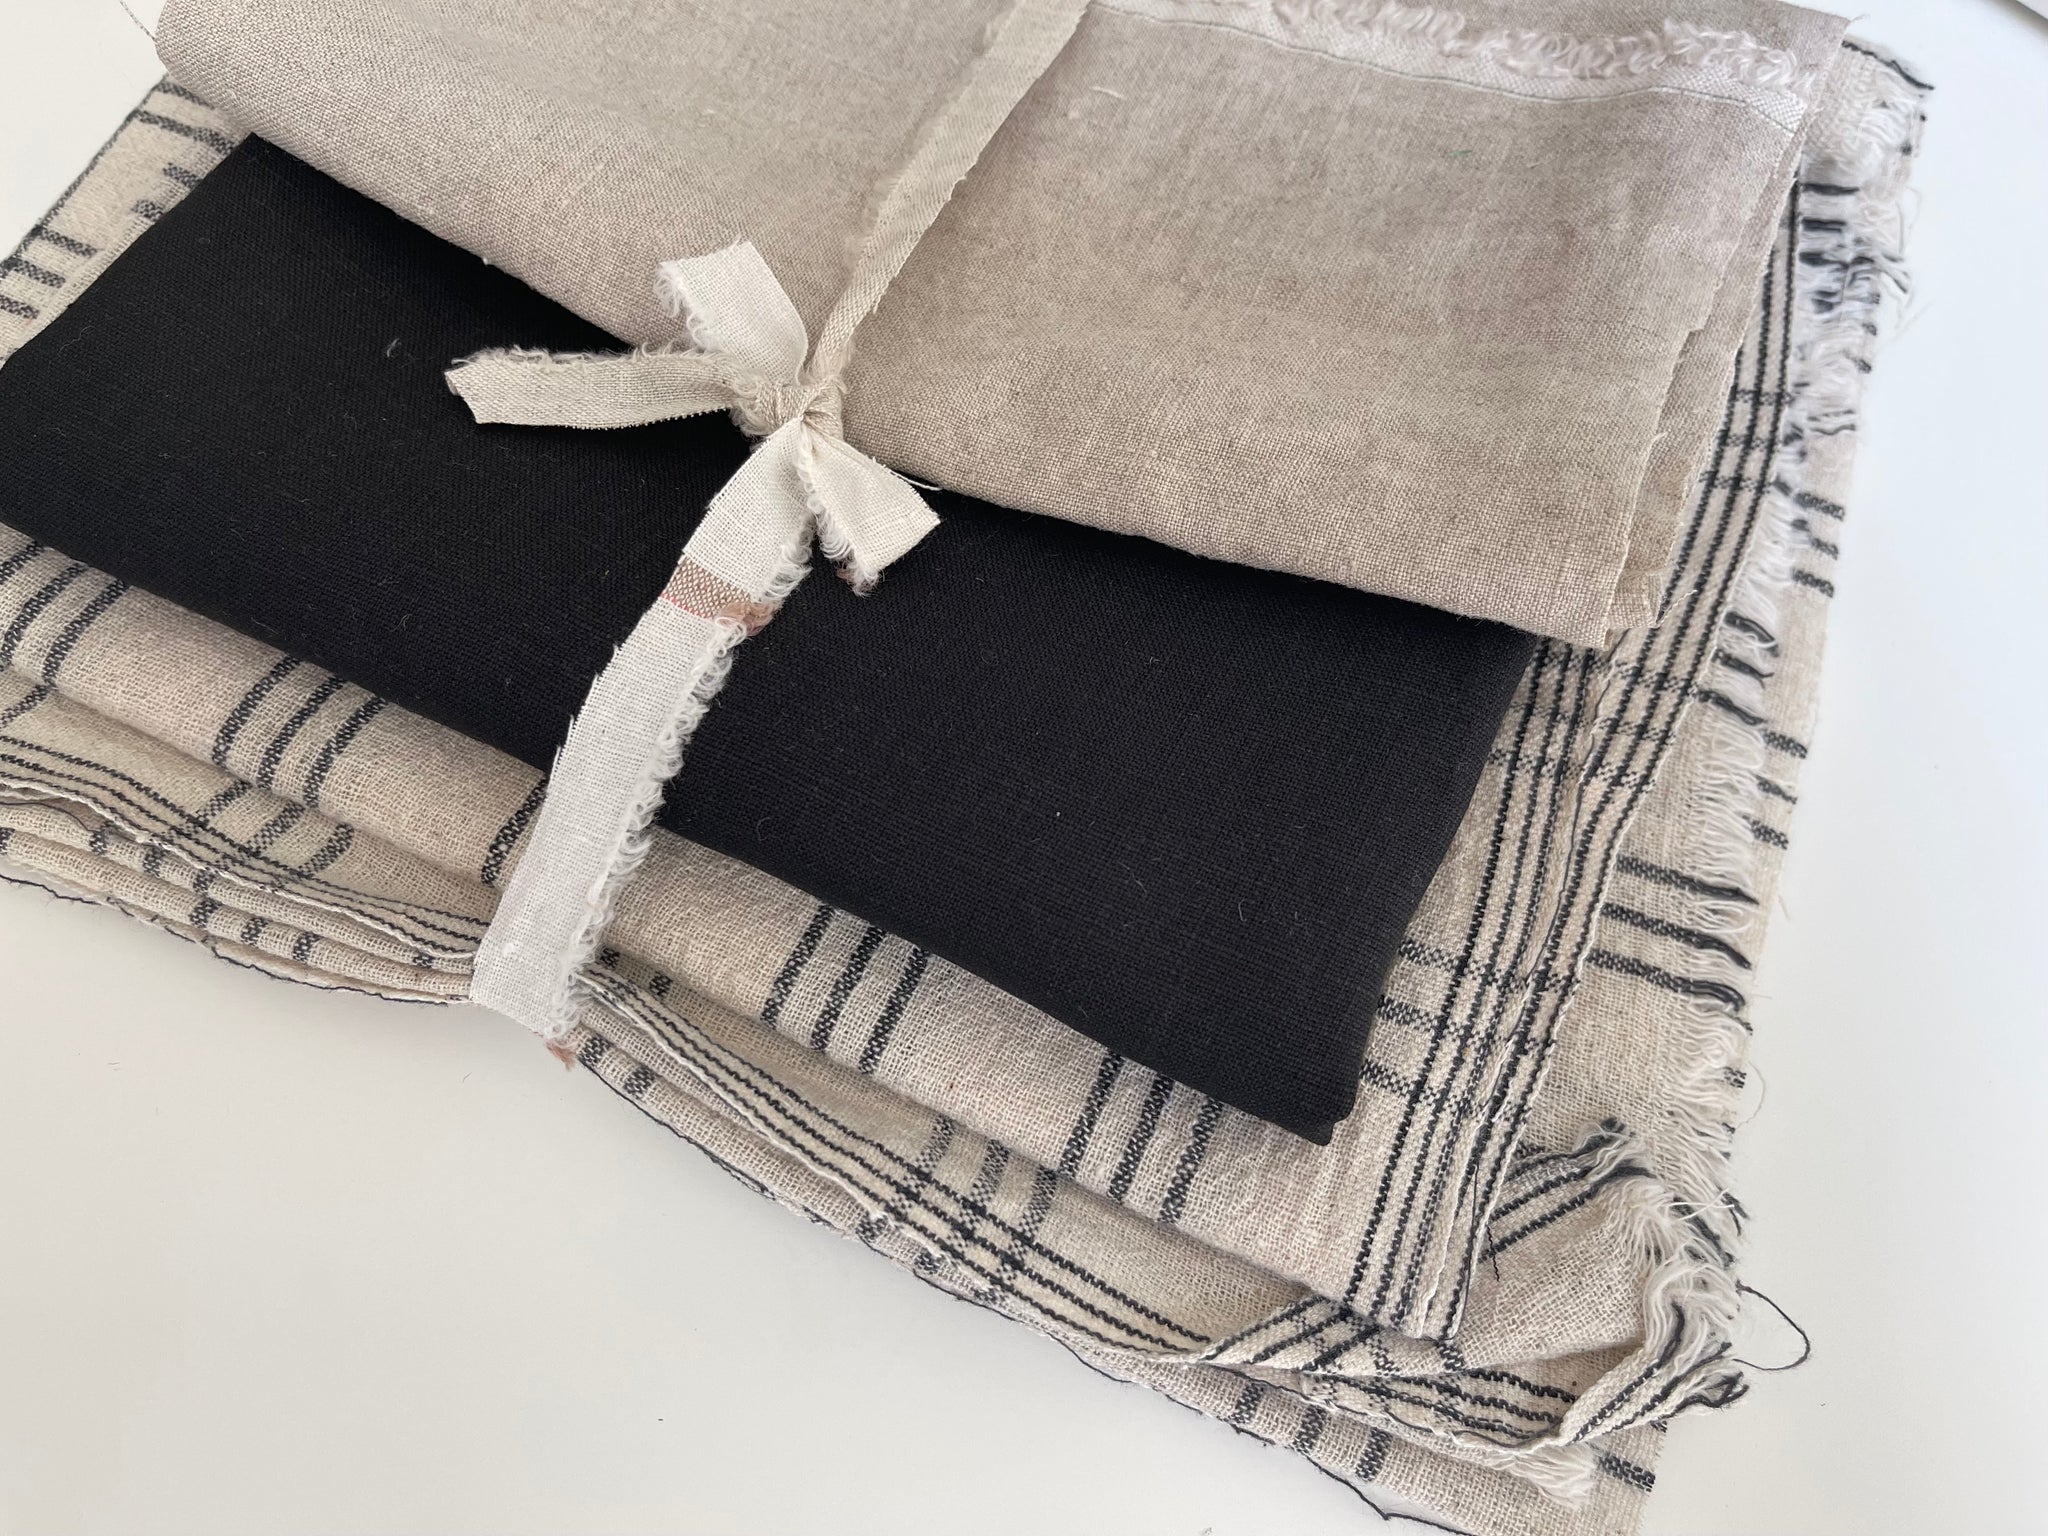 Fabric Remnants Bundle - Linen and Handwoven Cotton